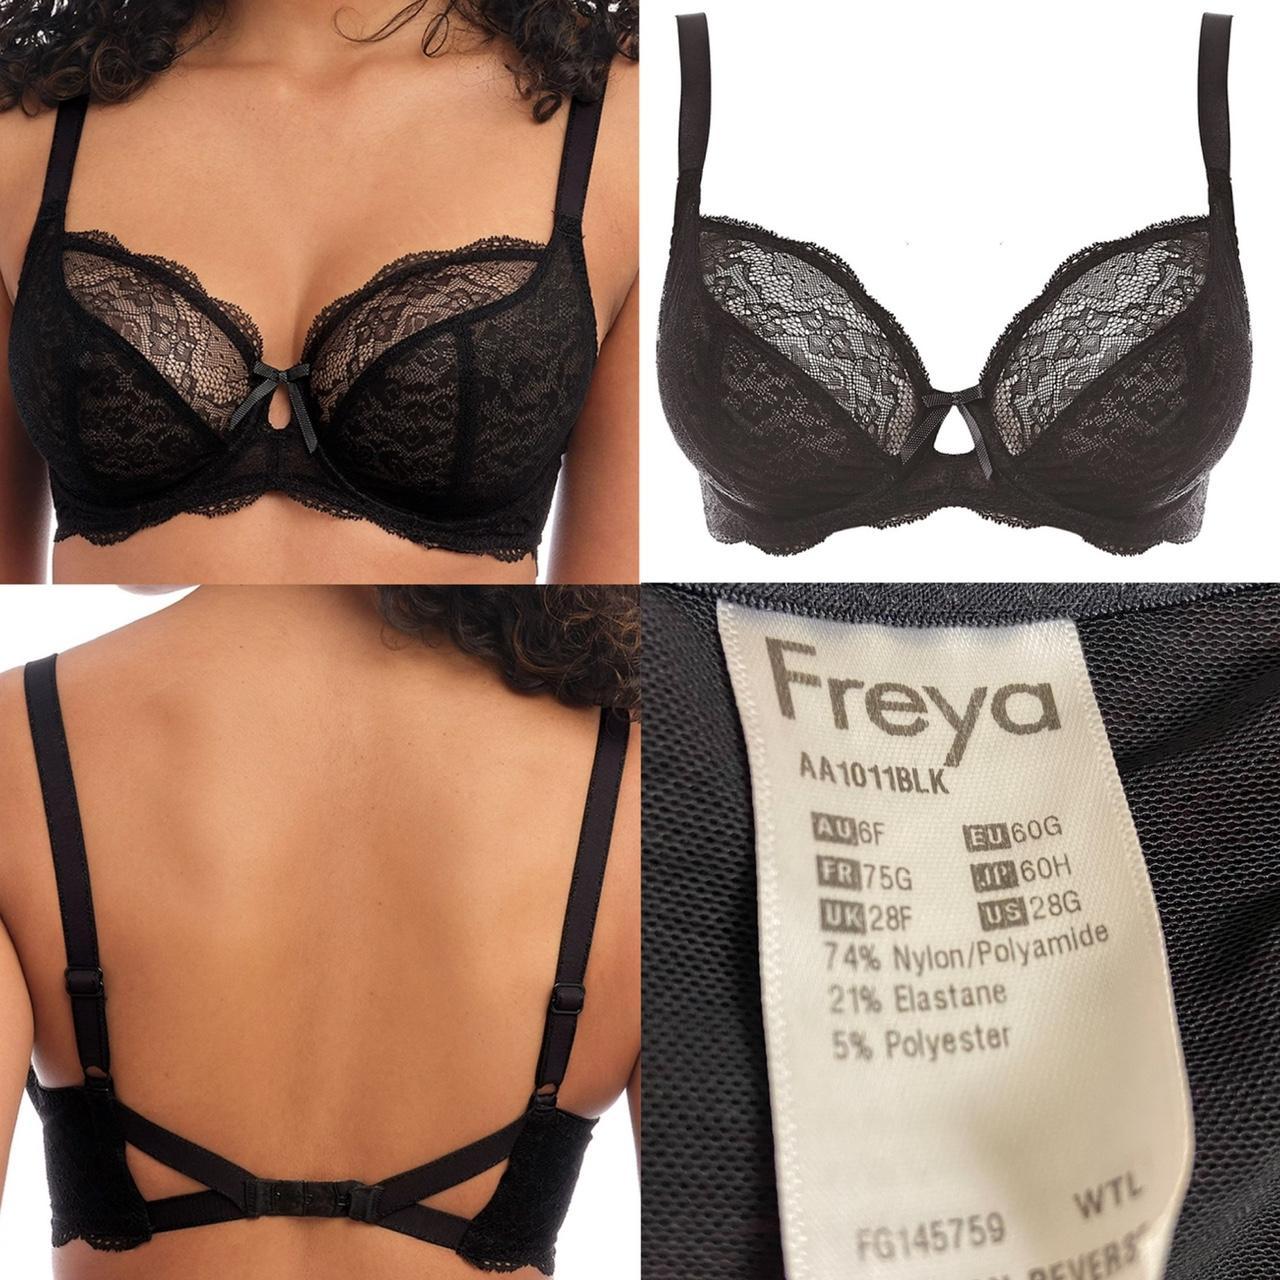 Product Image 4 - Freya Fancies Underwire Plunge Bra

Size